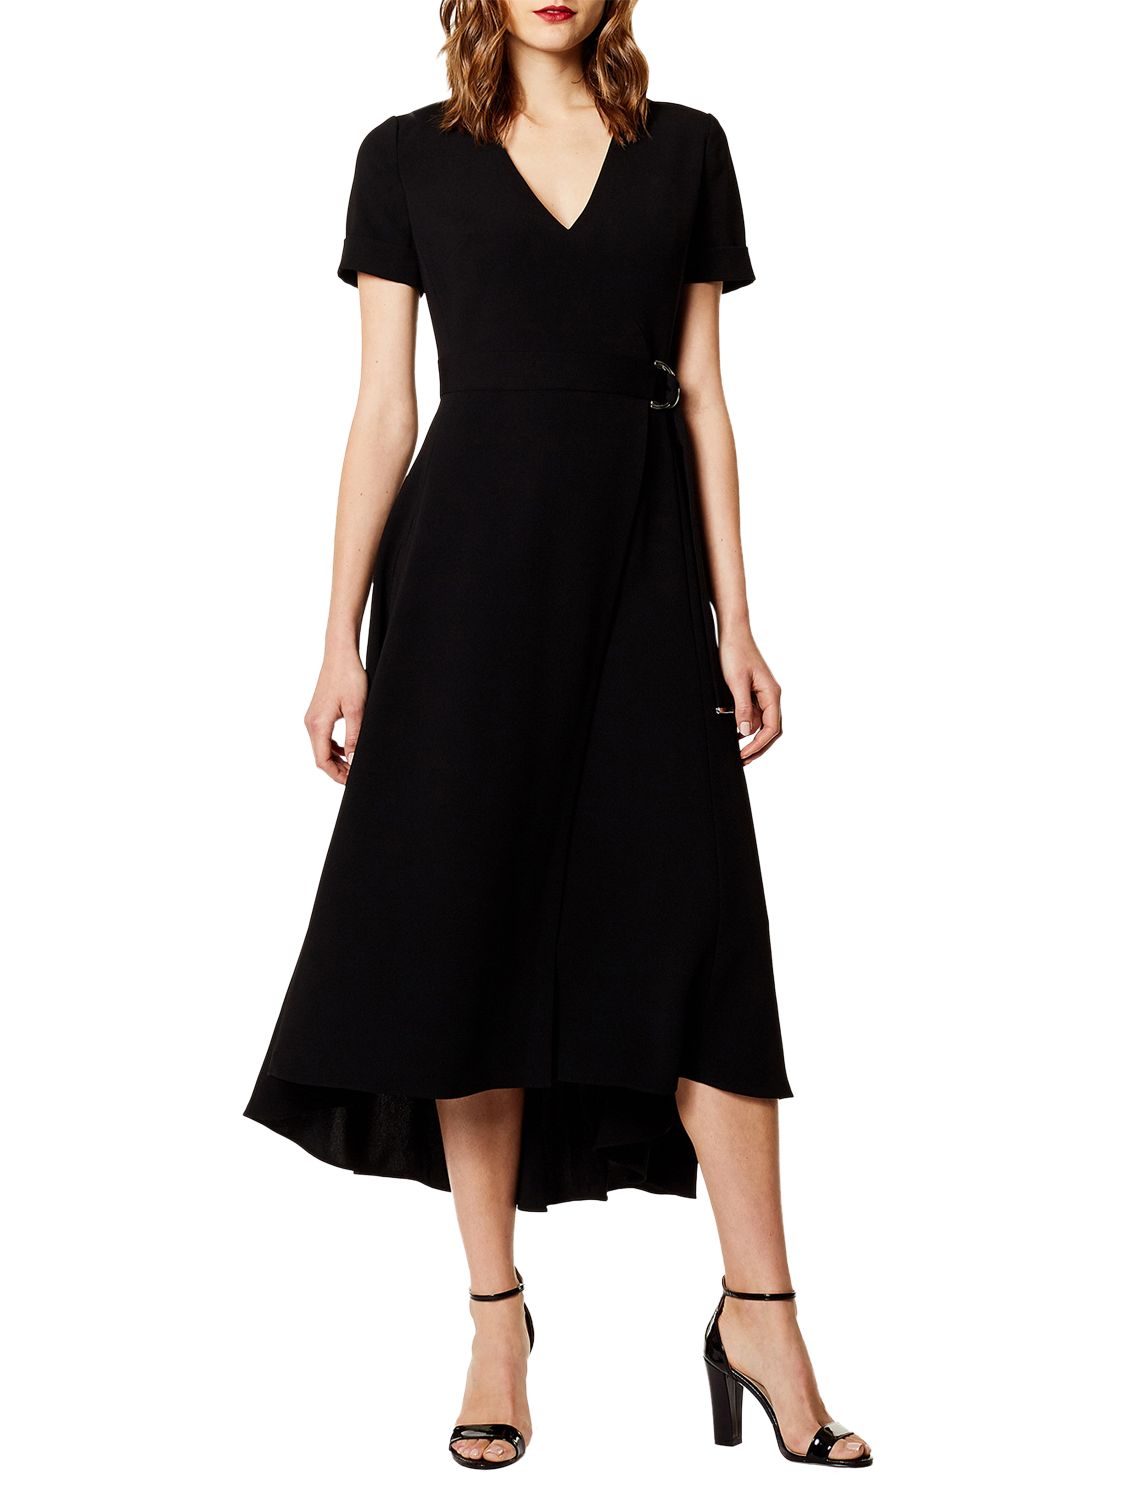 Karen Millen Wrap Dress, Black at John Lewis & Partners